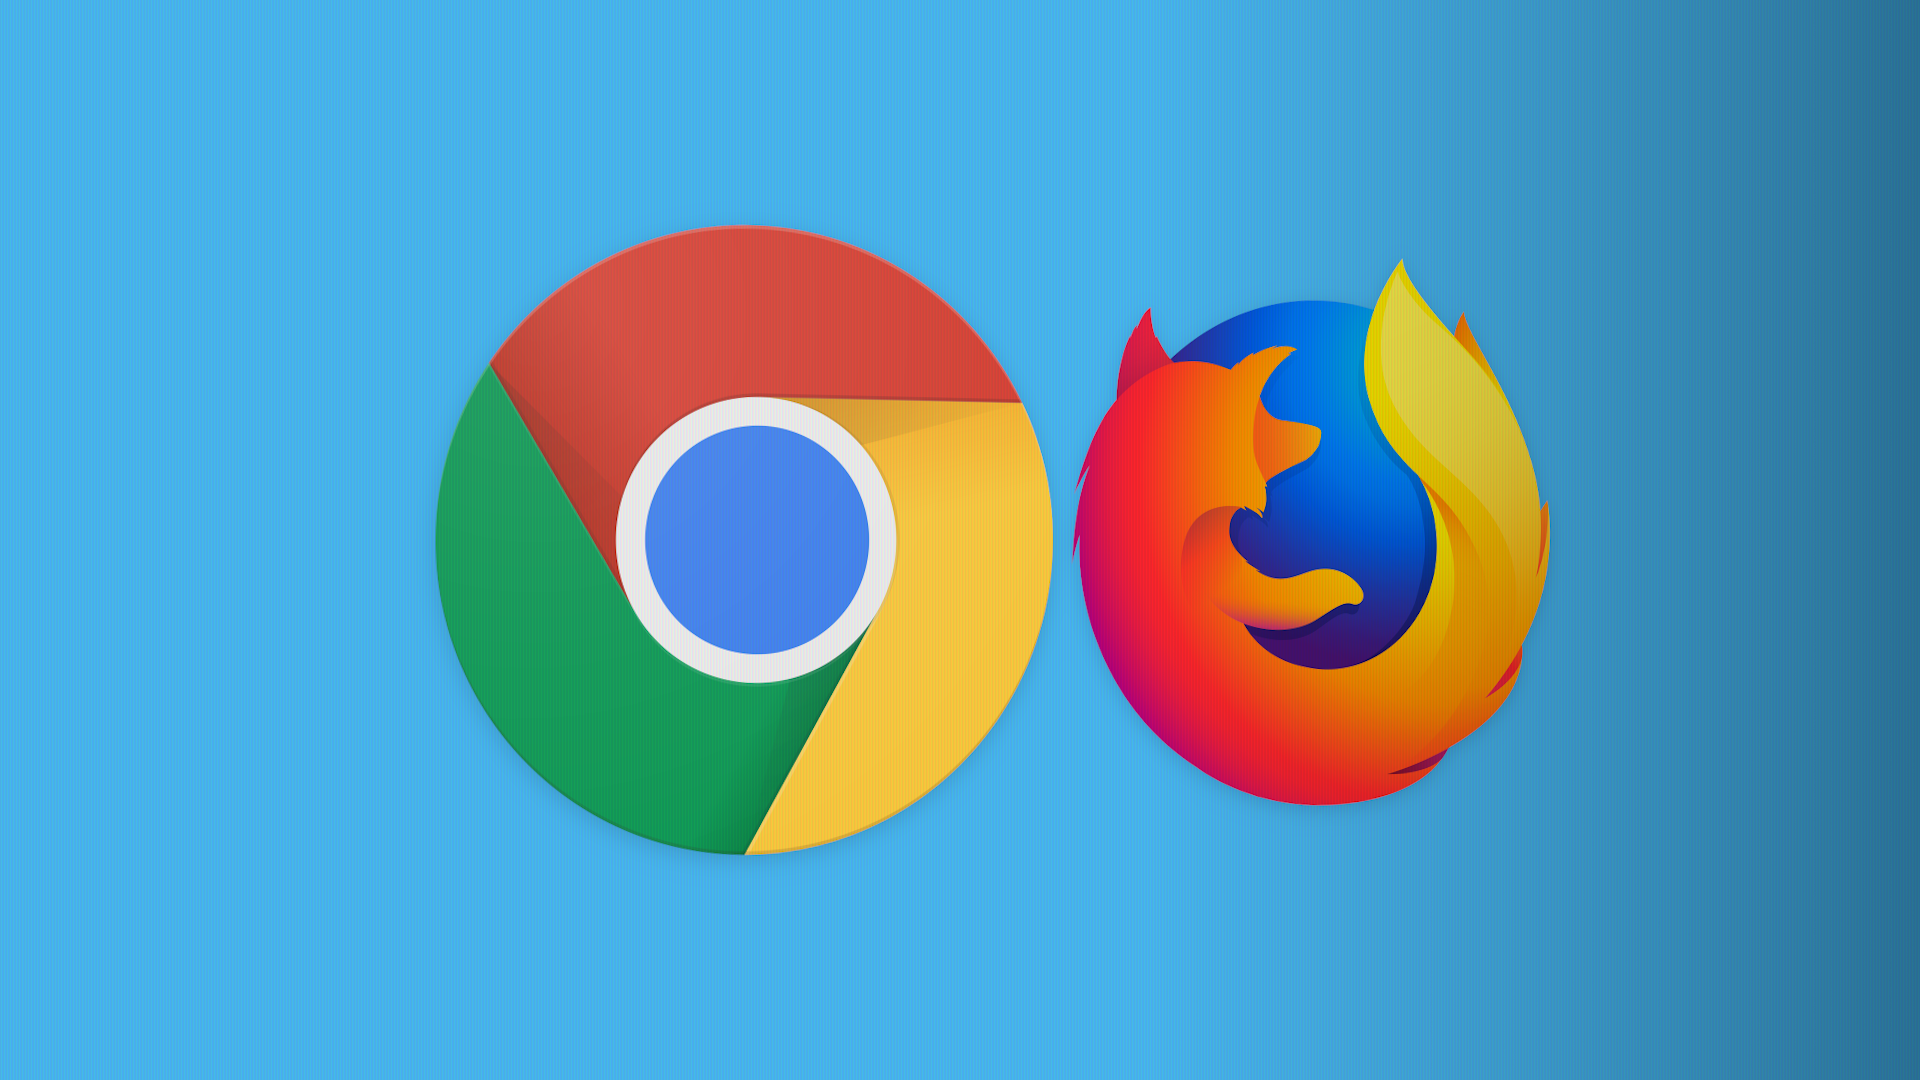 Google Chrome and Mozilla Firefox logos.